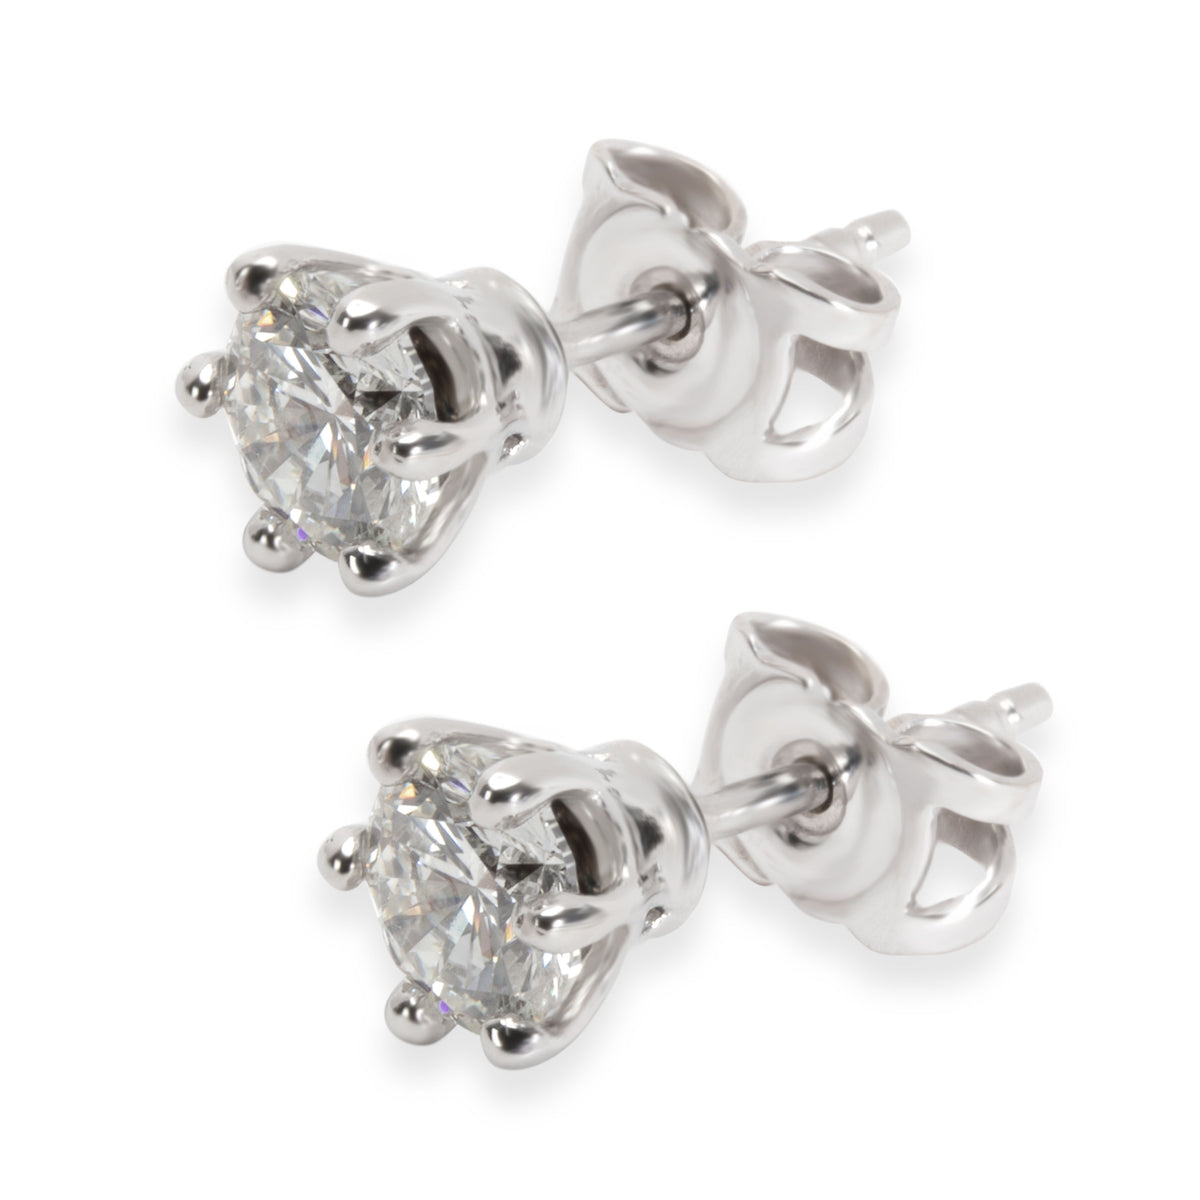 IGI Certified Round Cut Diamond Stud Earrings in Platinum H VVS2 (1.05 CTW)